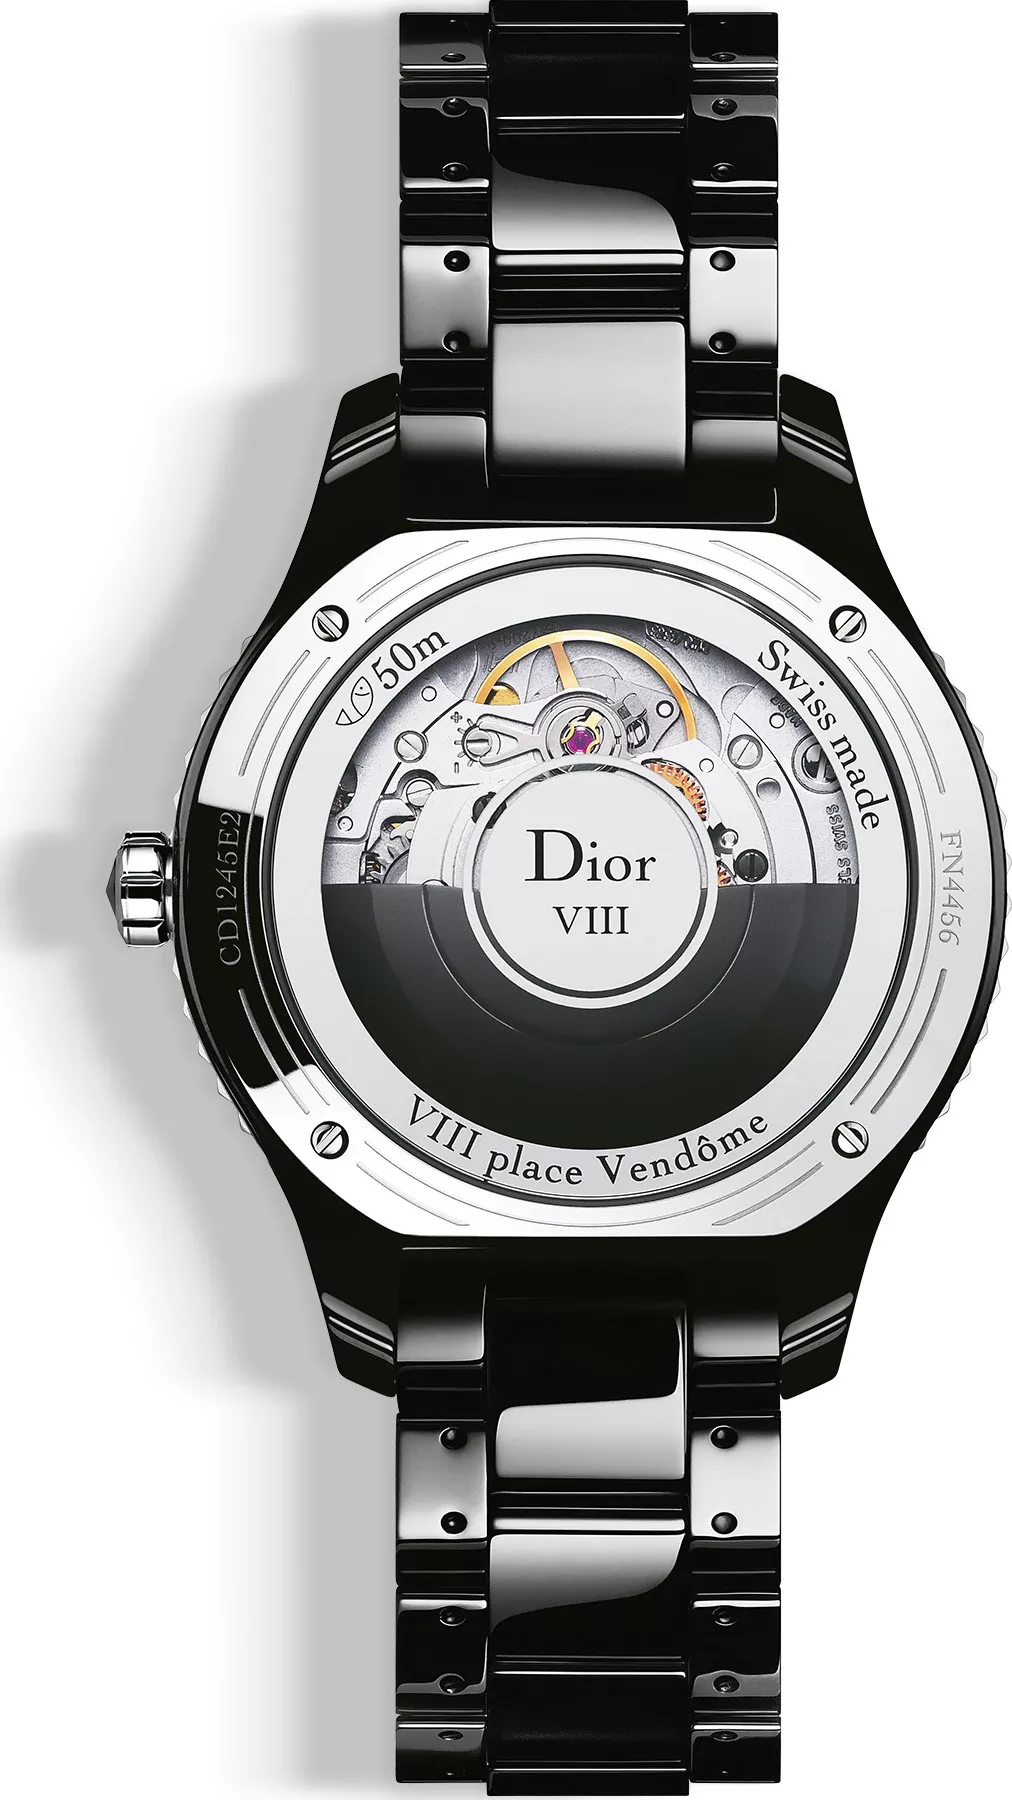 Christian Dior Dior VIII CD1245E1C001 Automatic Watch 38